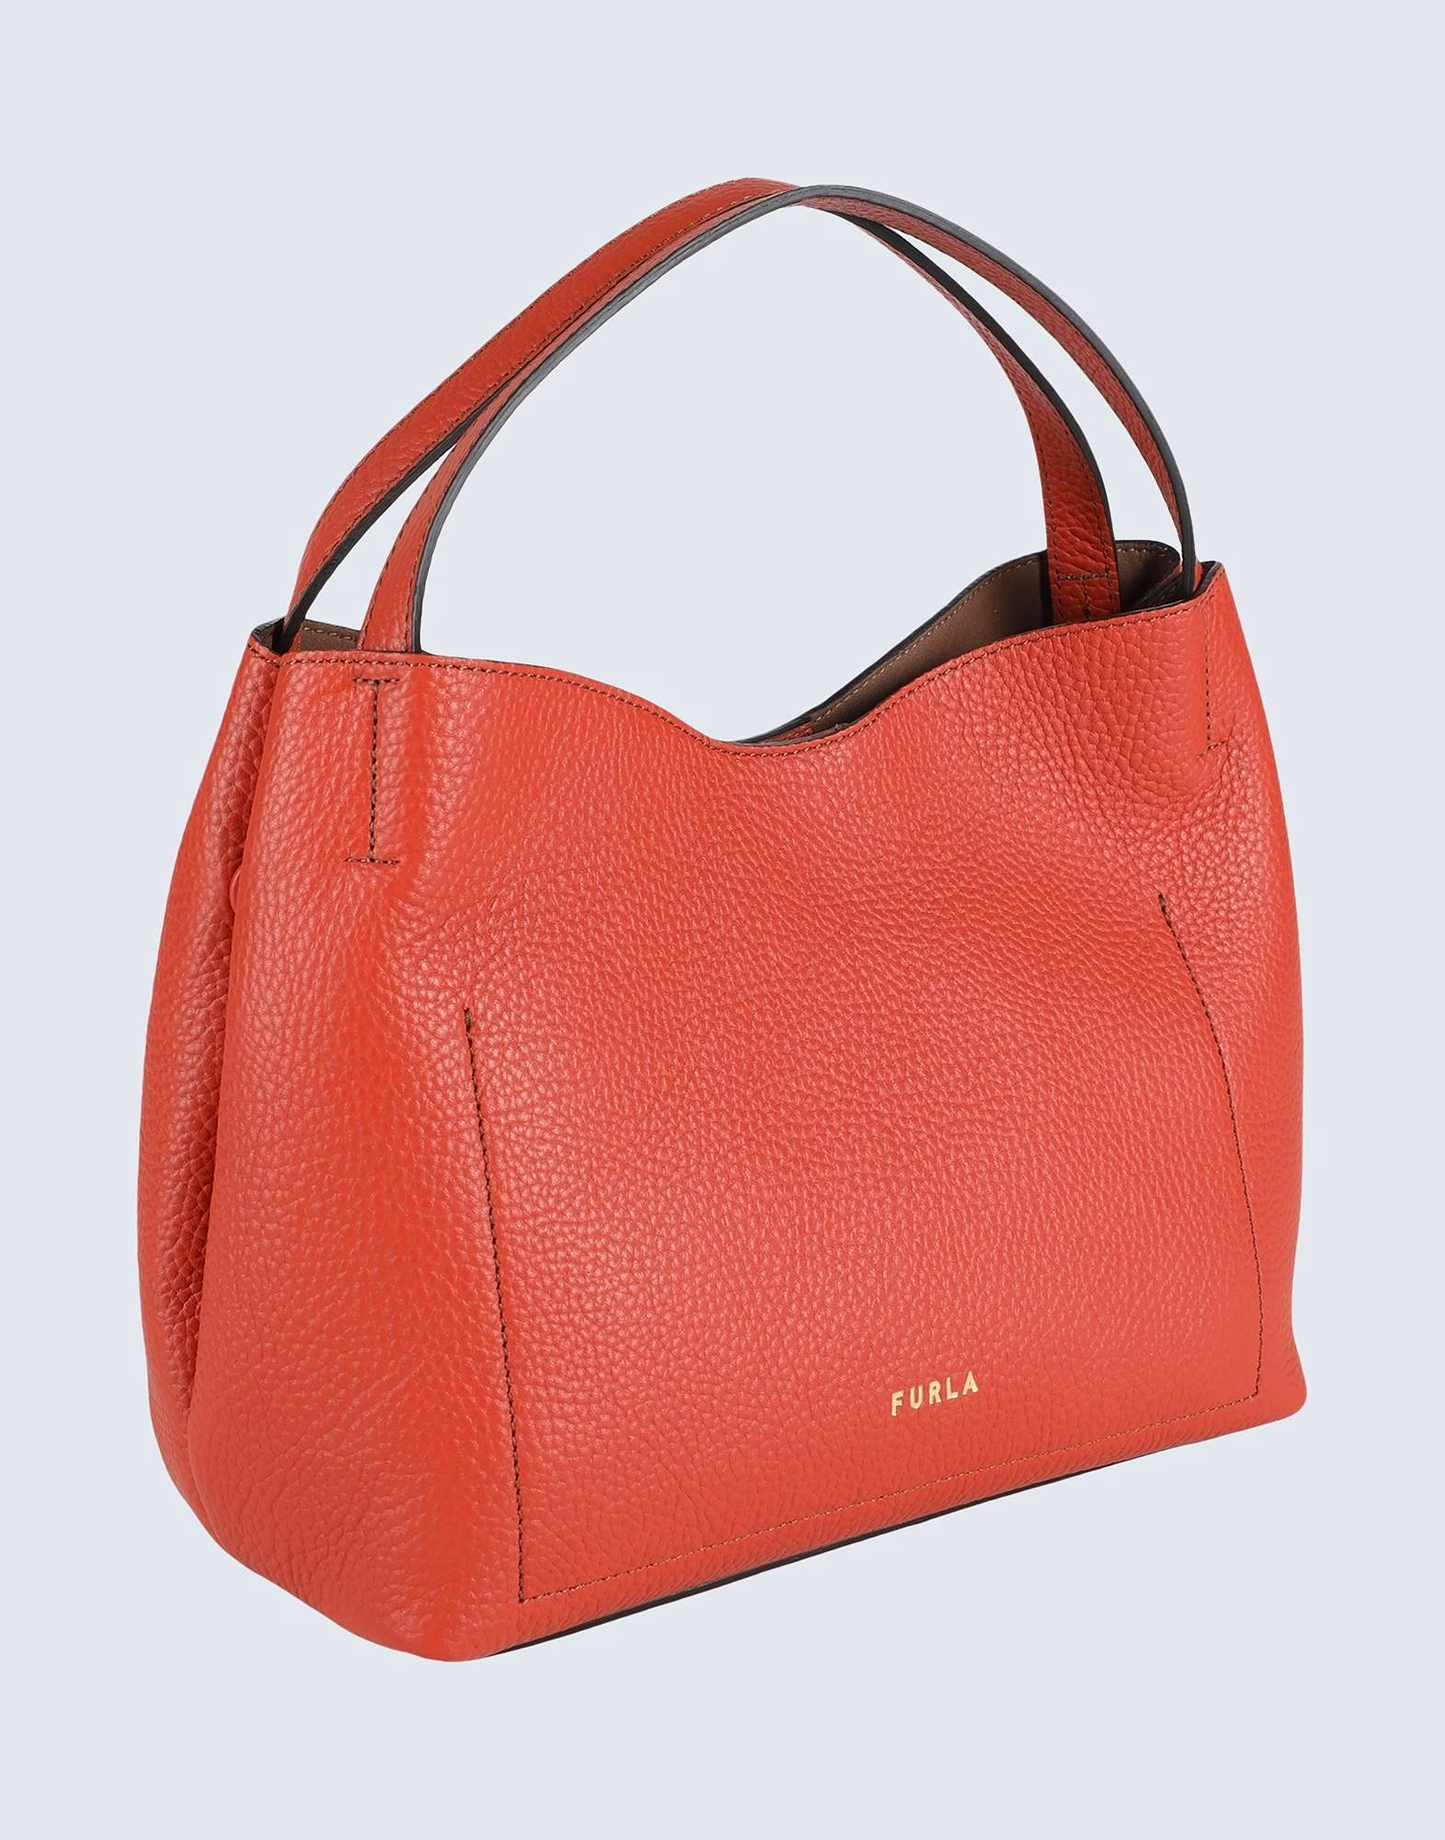 PARIOLI BAGS - Discount Designer Handbags Outlet |- FURLA FURLA PRIMULA S HOBO - VITELLO ST.DAINO NEW